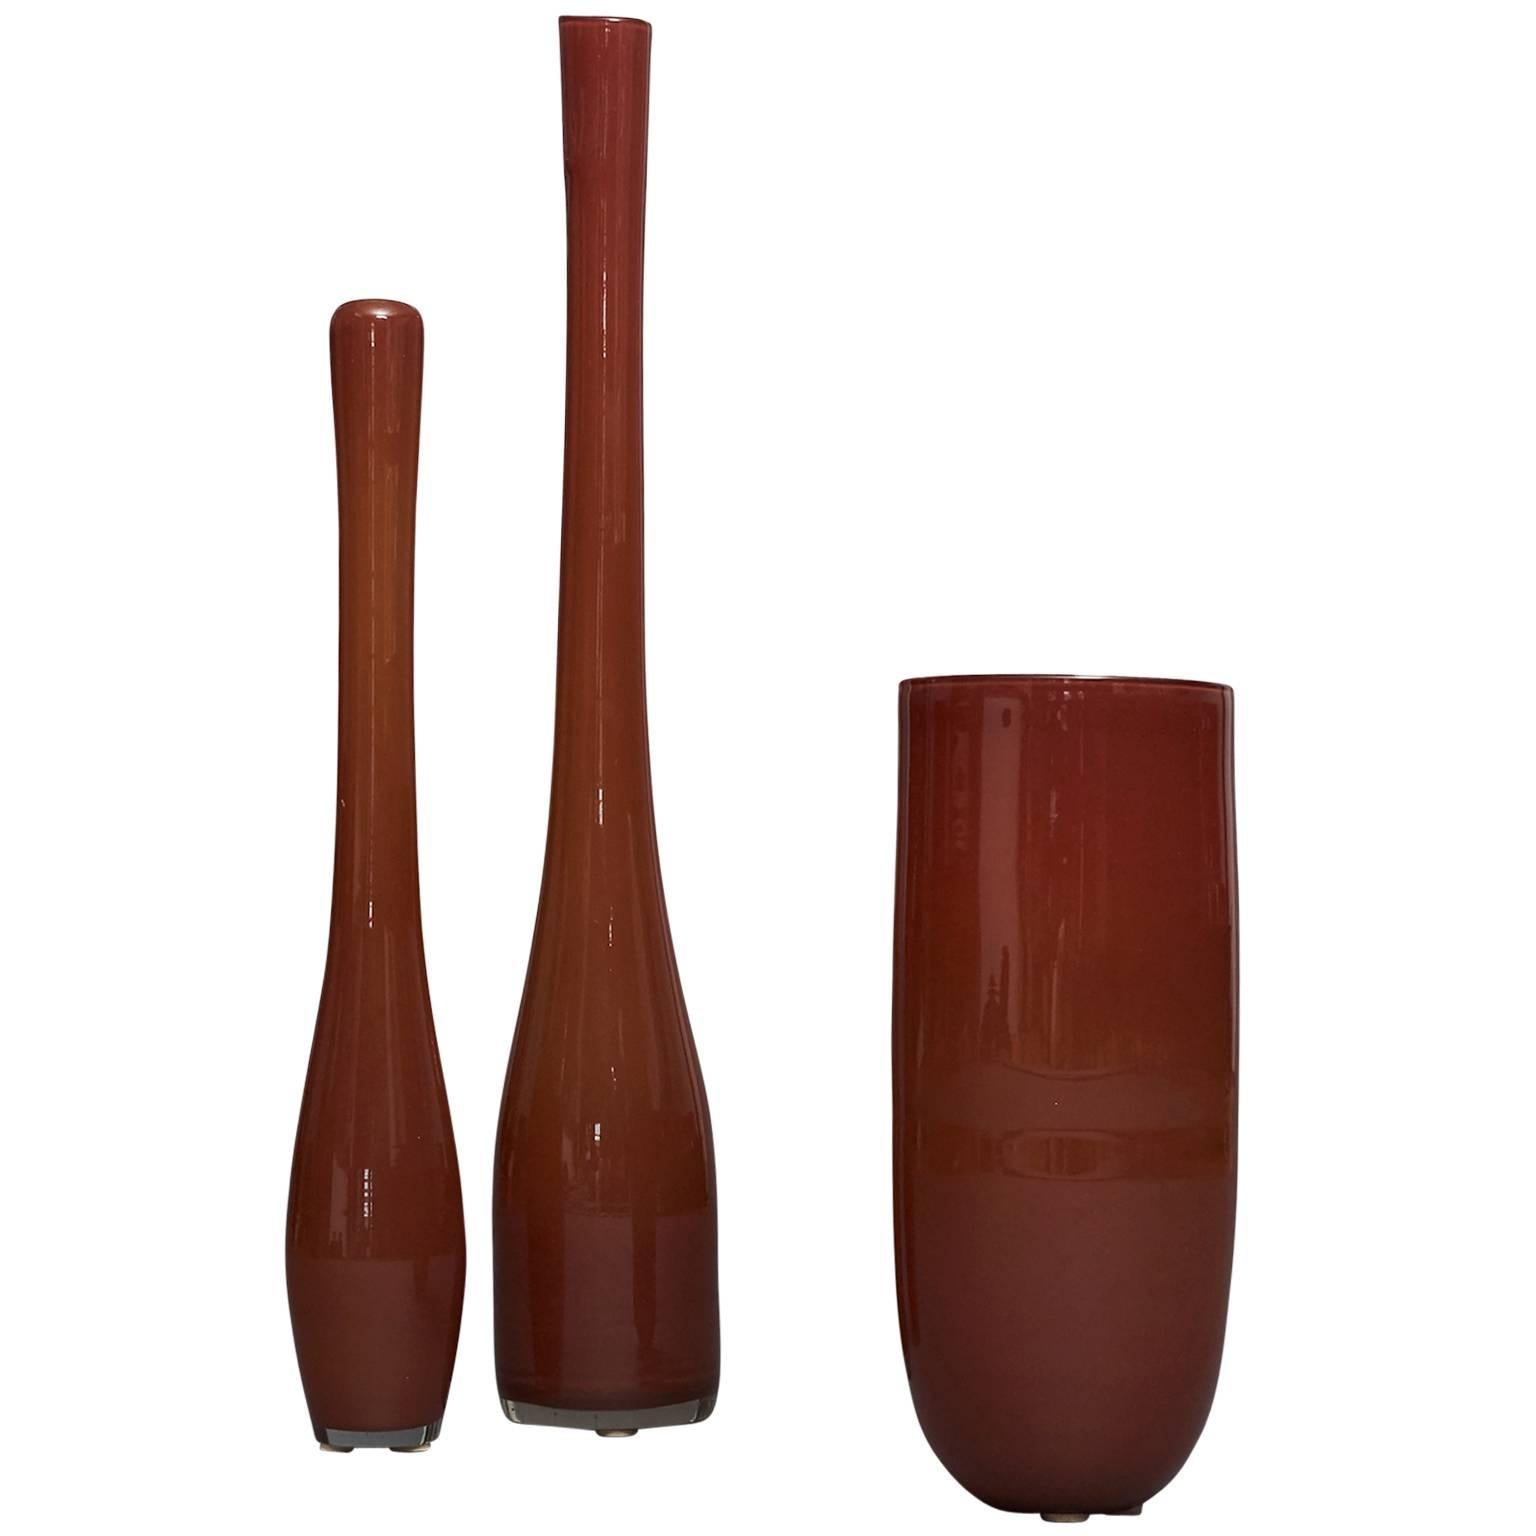 Hemphrey “Almost Tall Enough” Vases